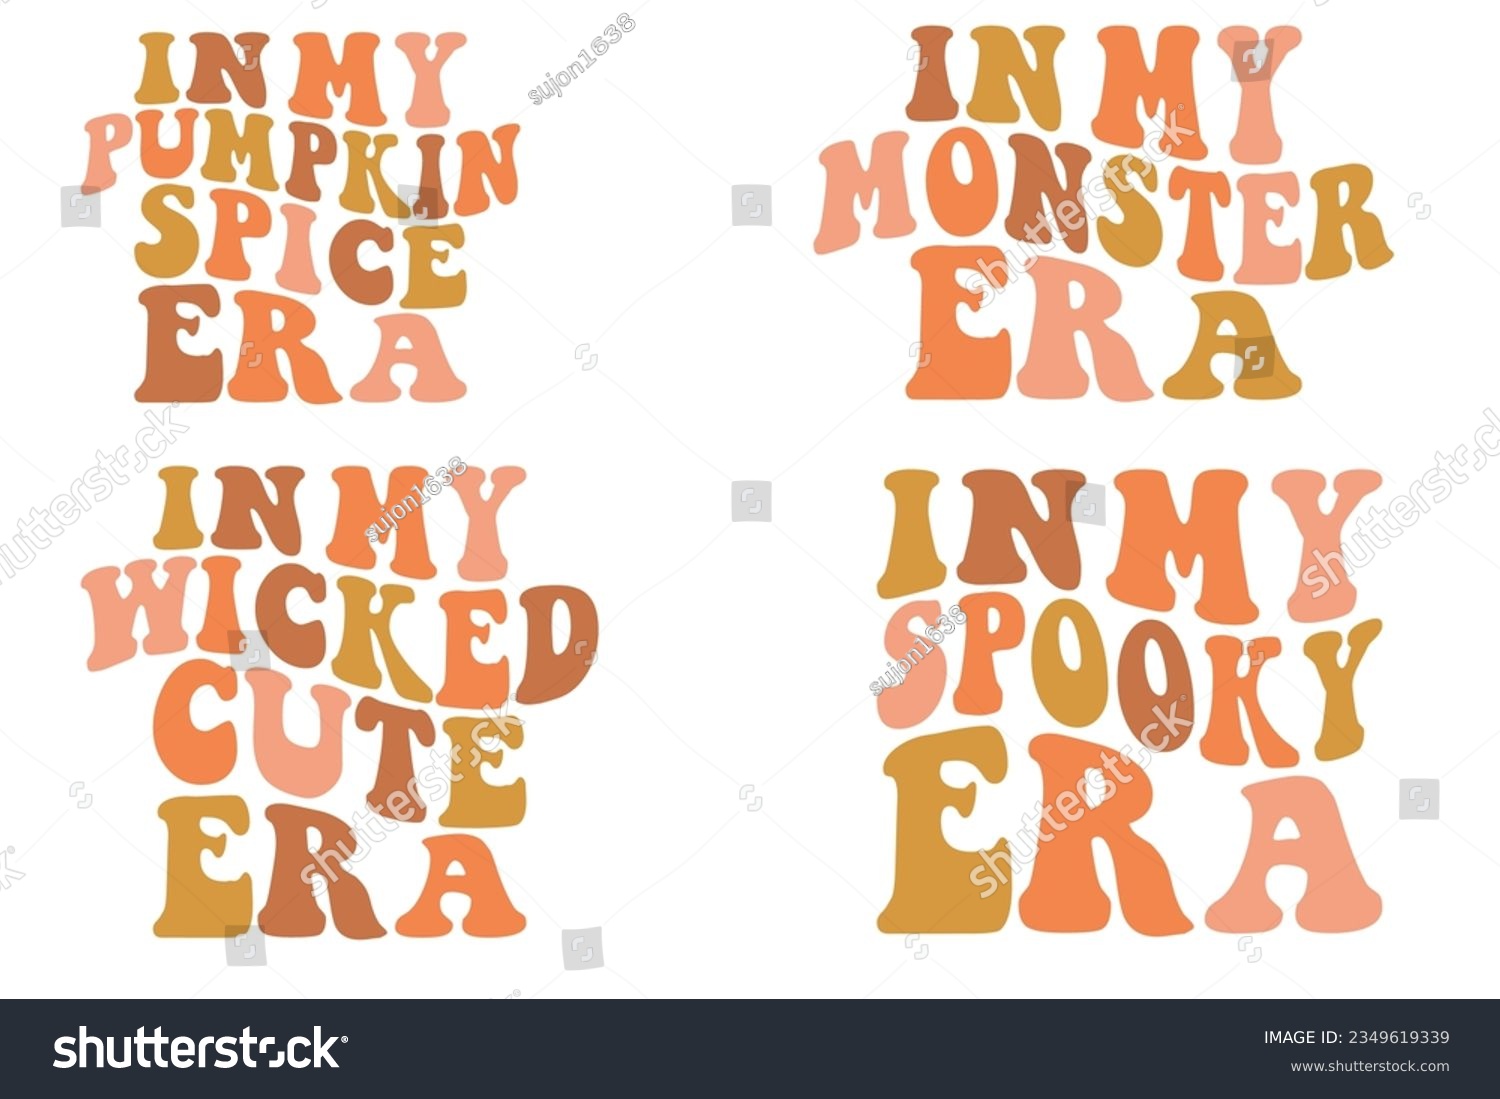 SVG of  In My Pumpkin Spice Era, In My Monster Era, In My Wicked Cute Era, In My Spooky Era retro wavy SVG T-shirt designs svg